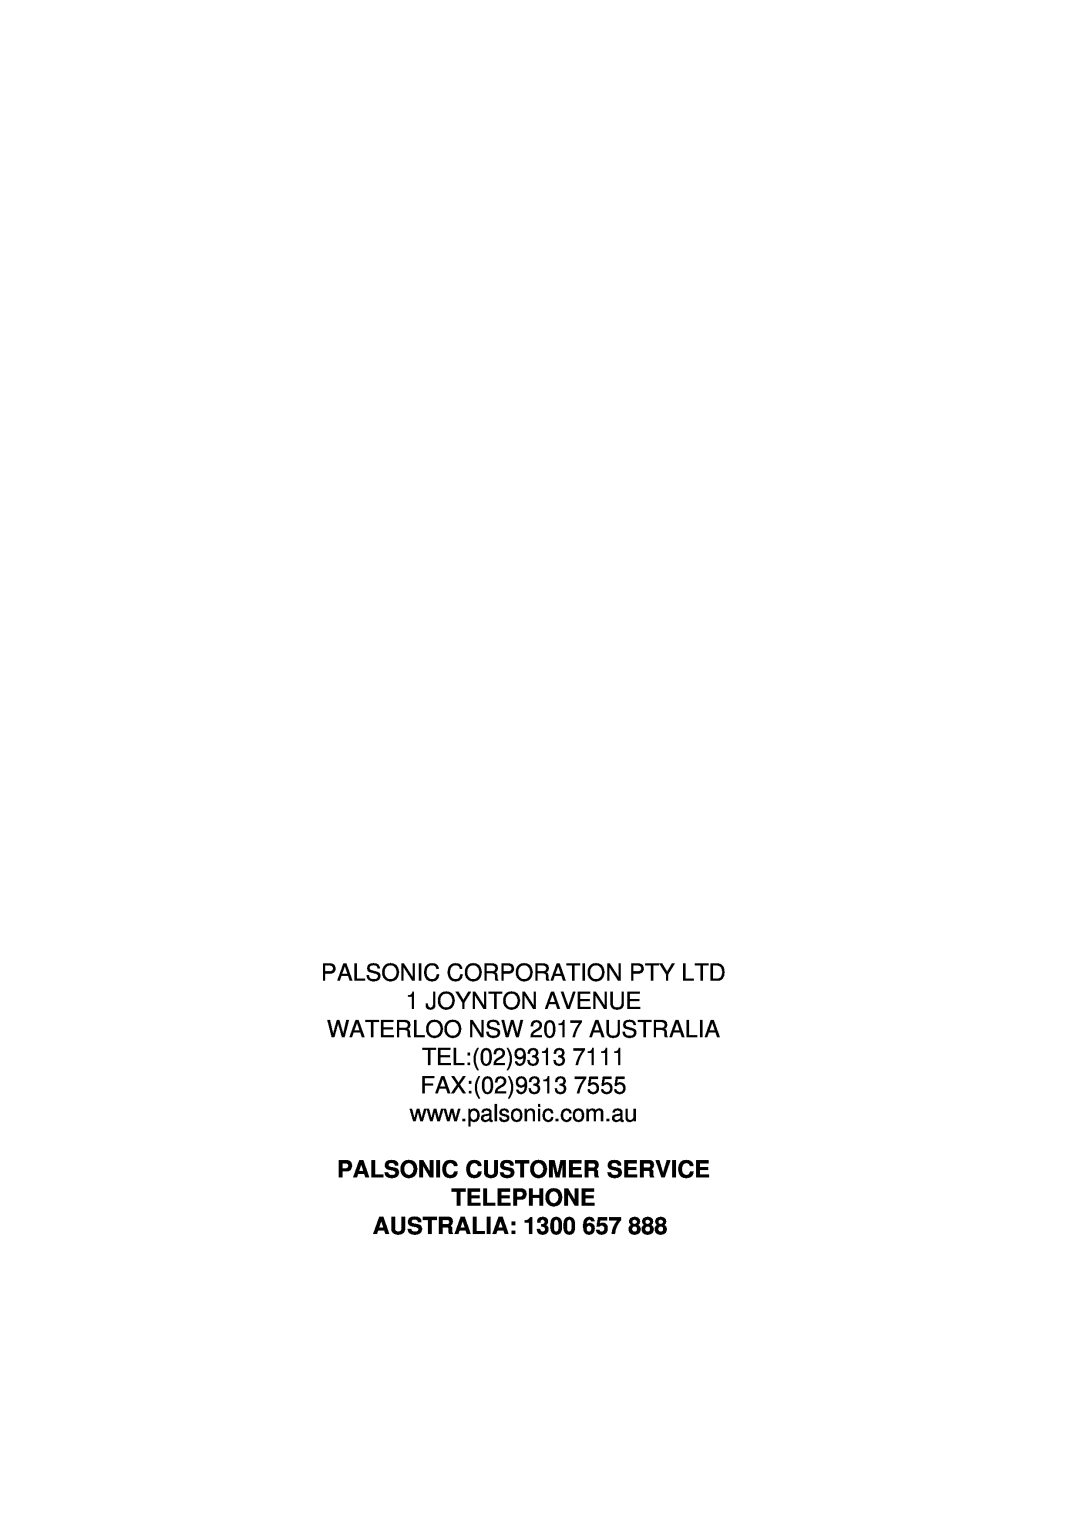 Palsonic PMO-850 JOYNTON AVENUE WATERLOO NSW 2017 AUSTRALIA TEL029313, Palsonic Customer Service Telephone Australia 